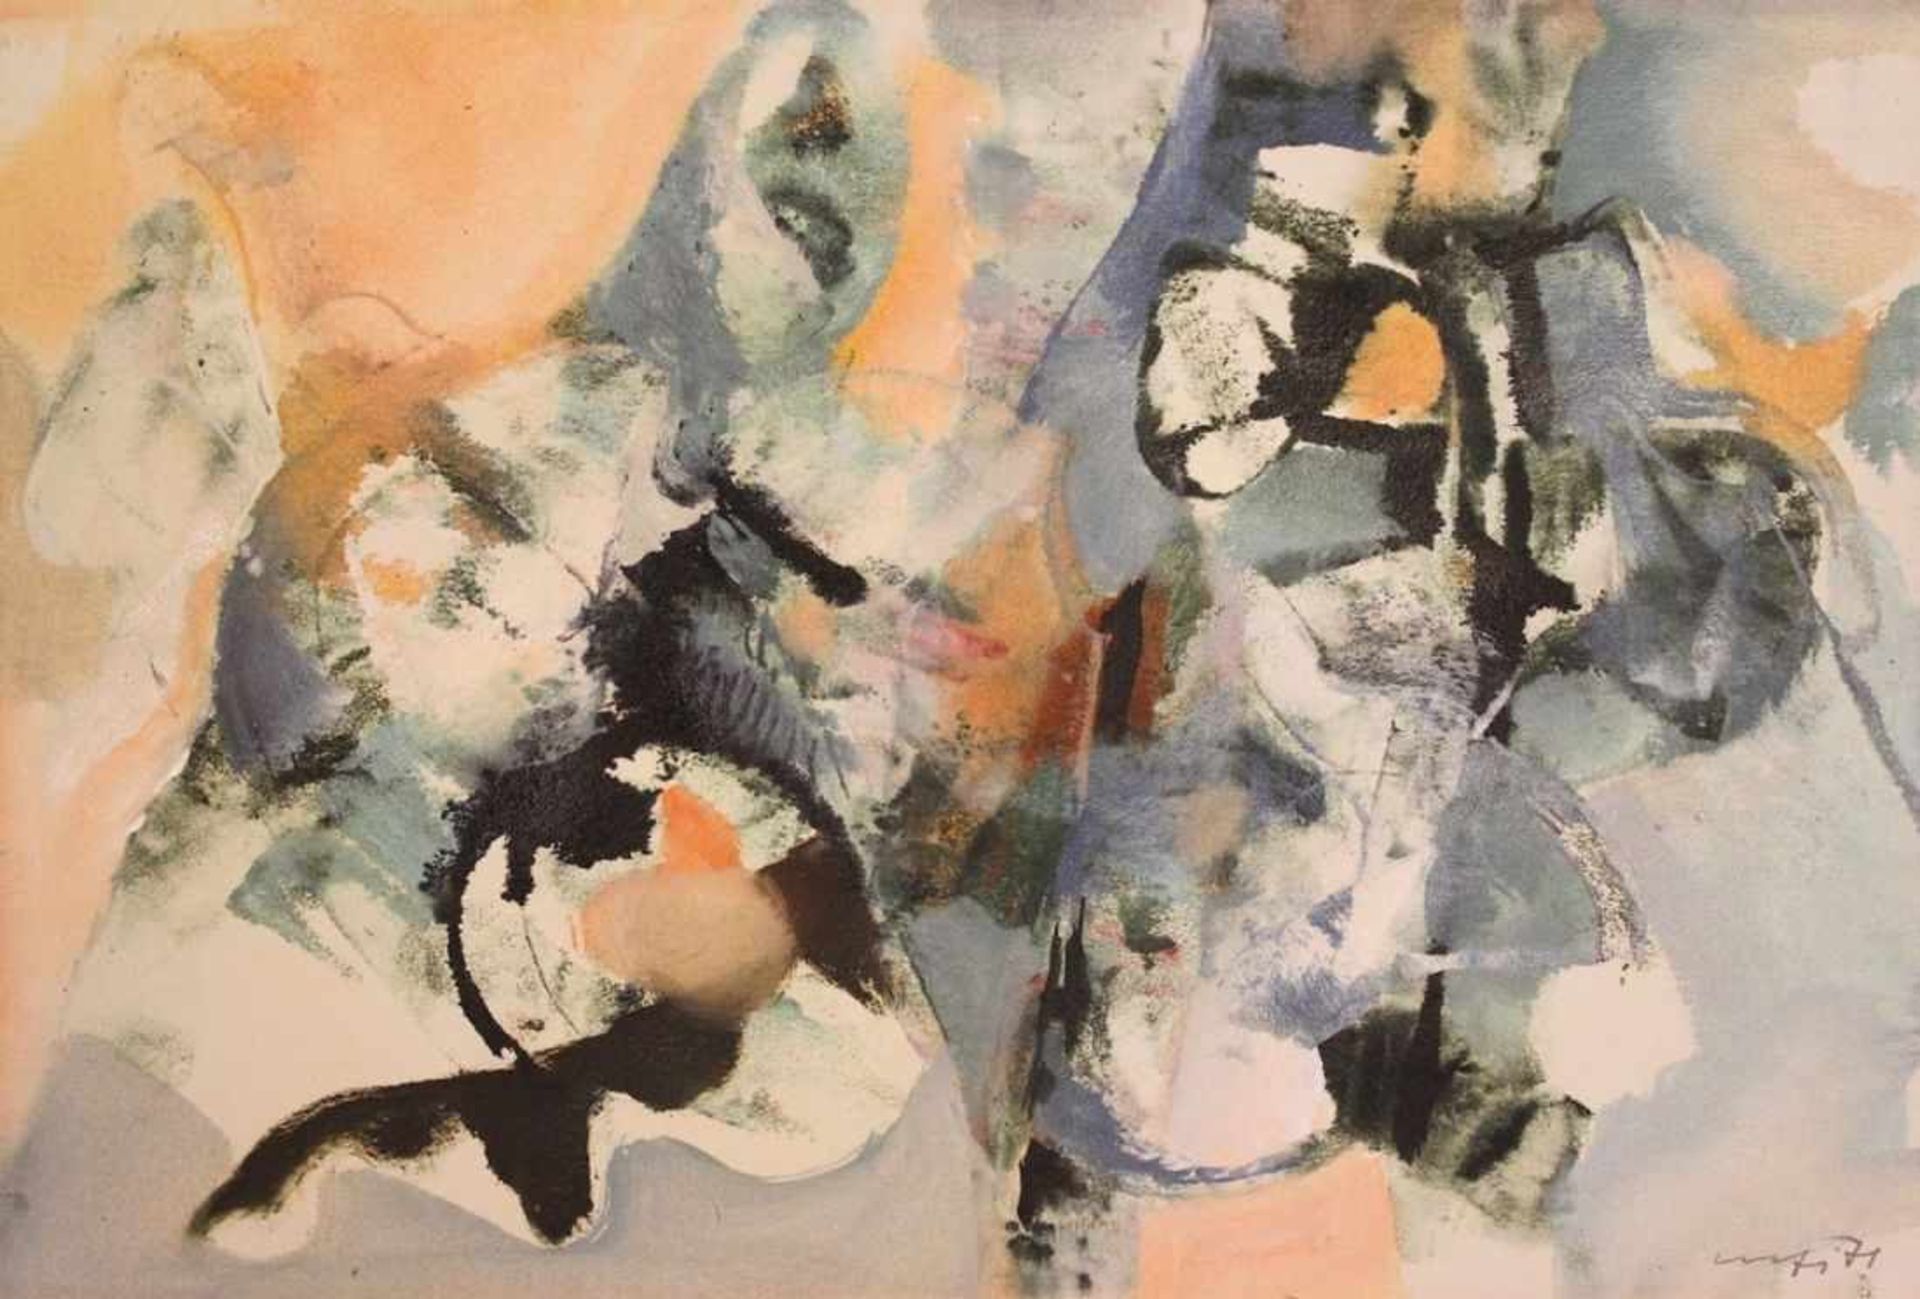 Aquarell - Willi Ulfig (1910 Breslau - 1983 Regensburg) "Abstrakte Komposition", r.u. signiert,